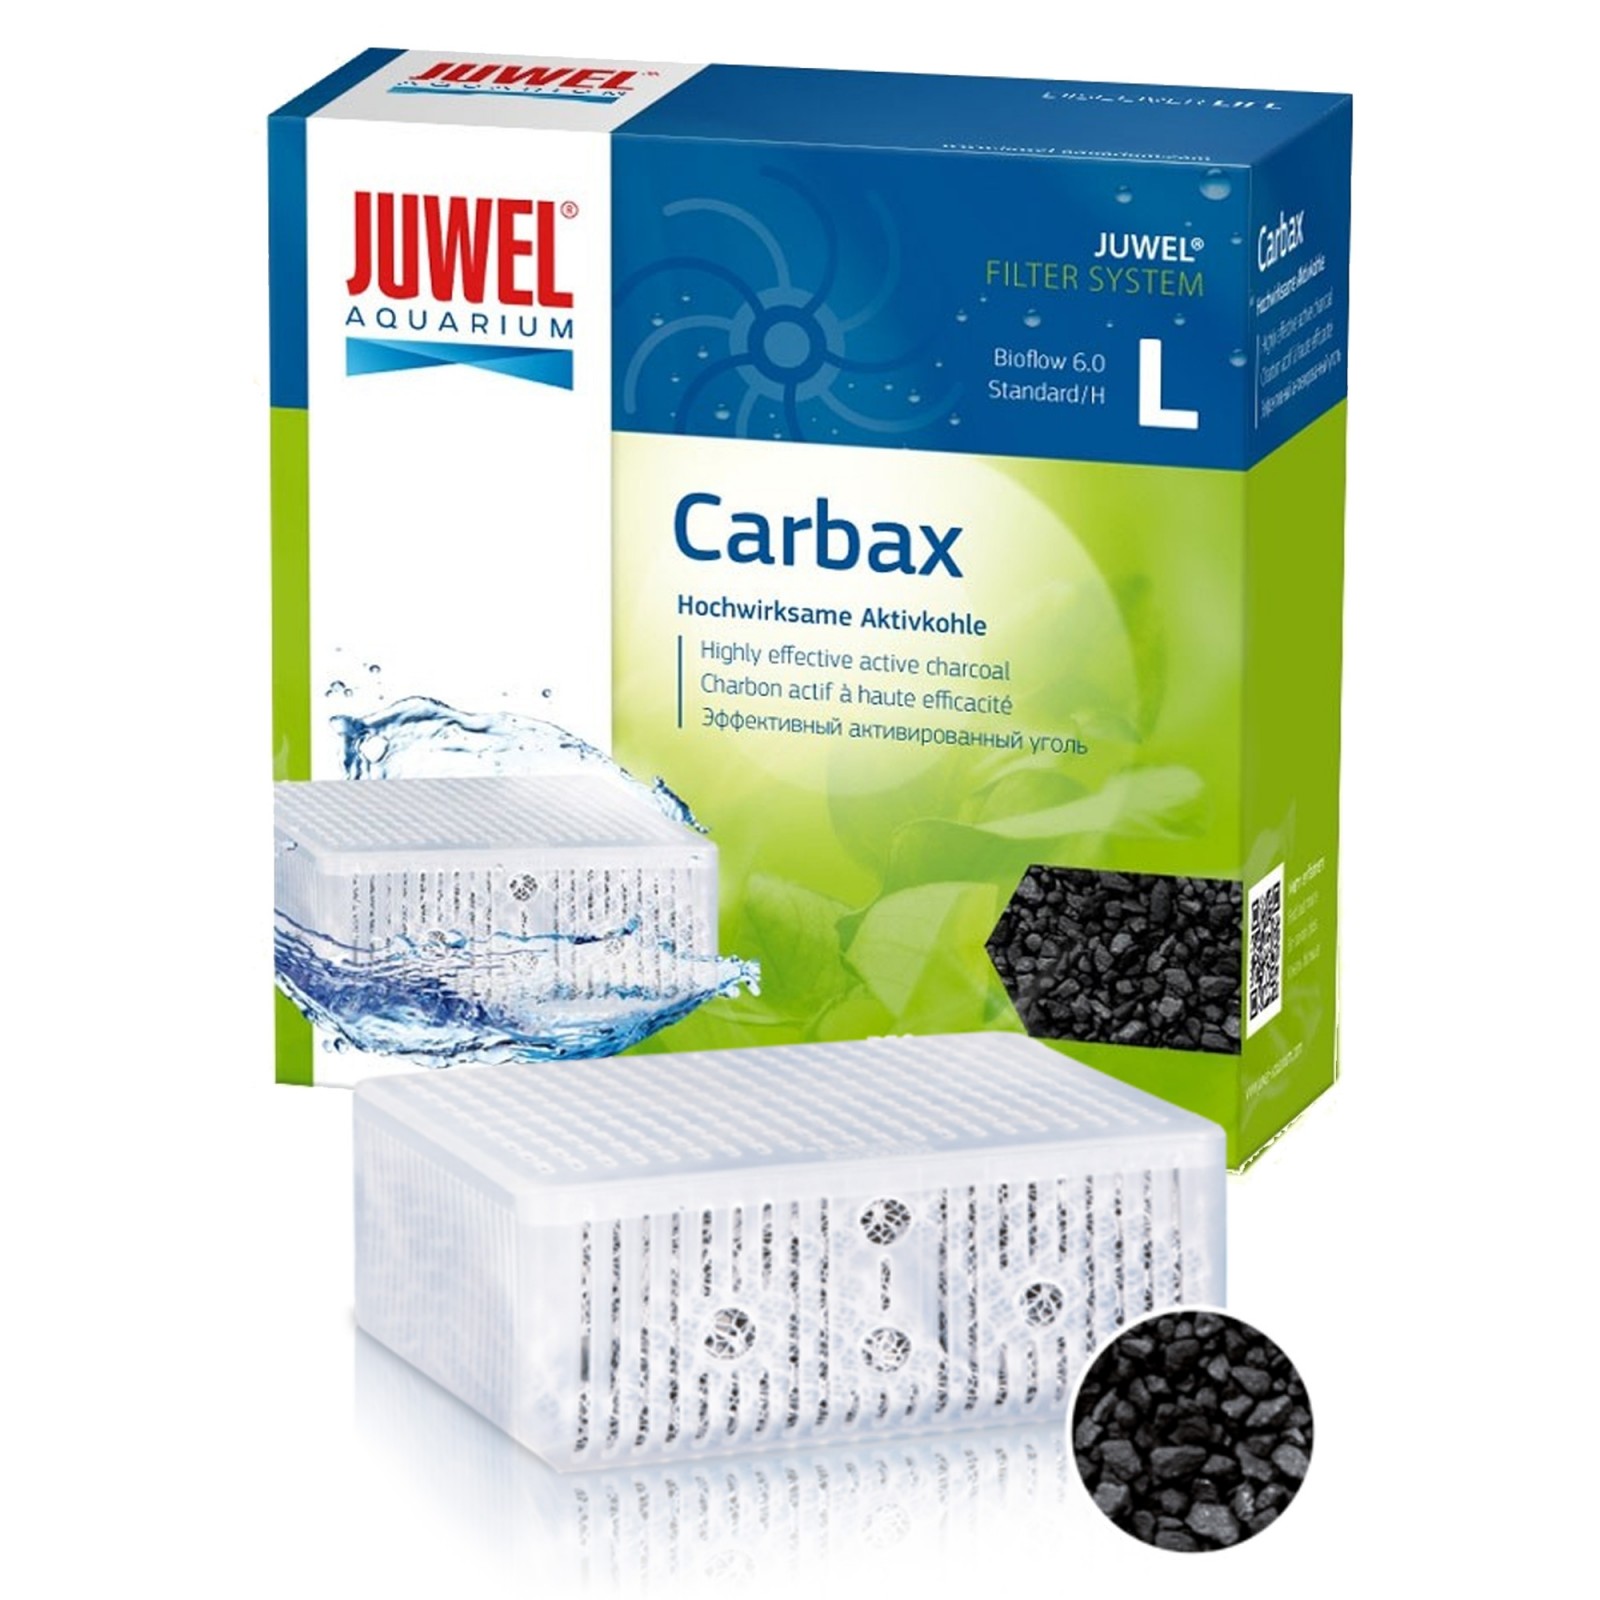 https://ibrio.it/5629-Ebay/juwel-carbax-l-per-filtro-bioflow-60-standard-carbone-attivo-per-acquario.jpg